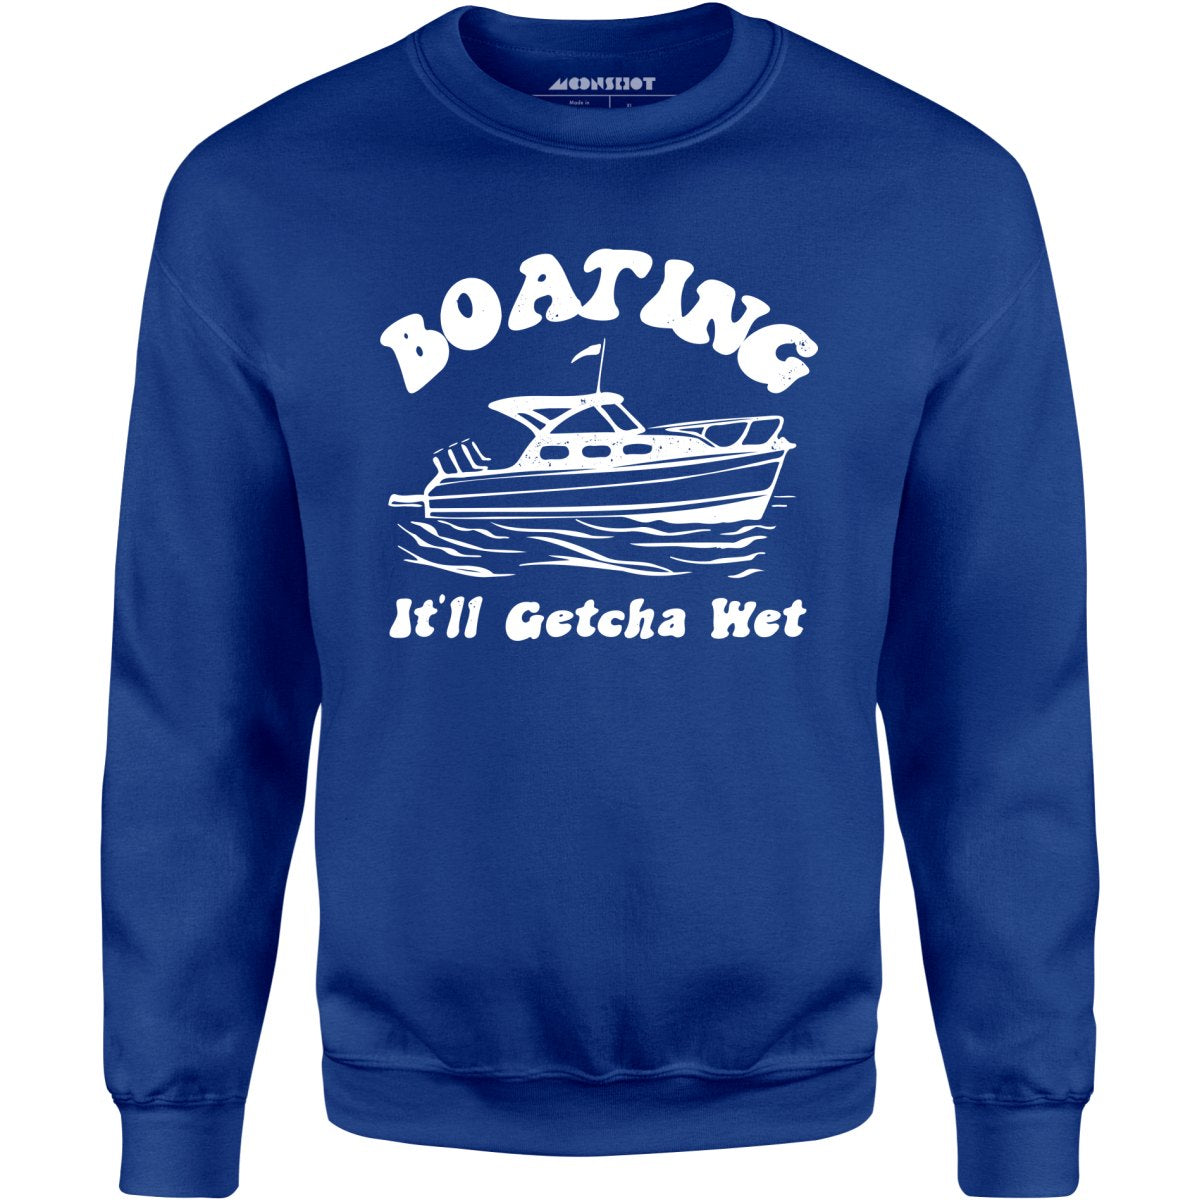 Boating It'll Getcha Wet - Unisex Sweatshirt